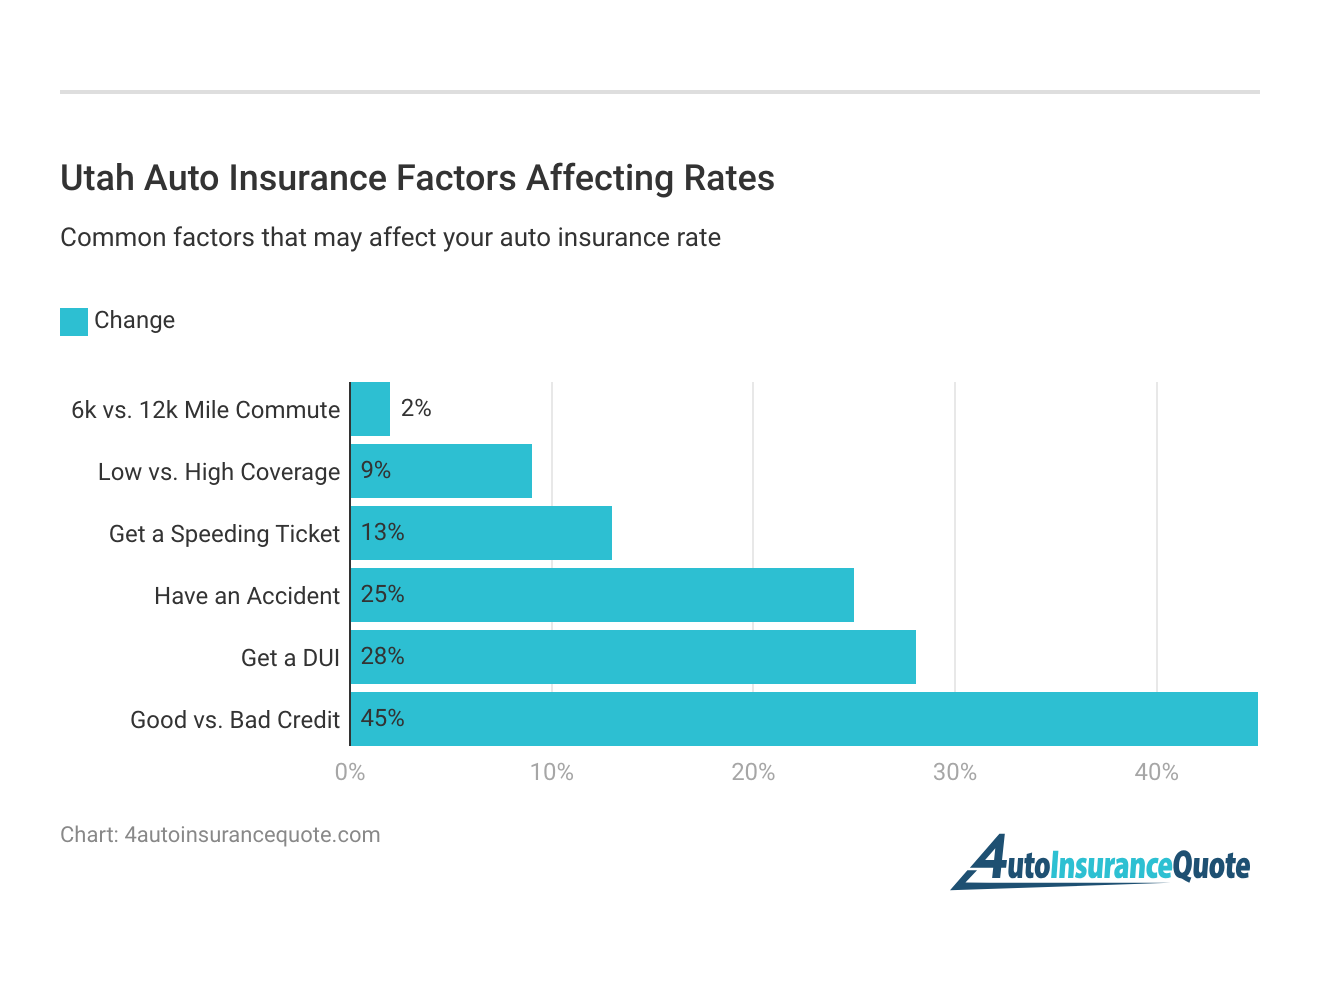 <h3>Utah Auto Insurance Factors Affecting Rates</h3>